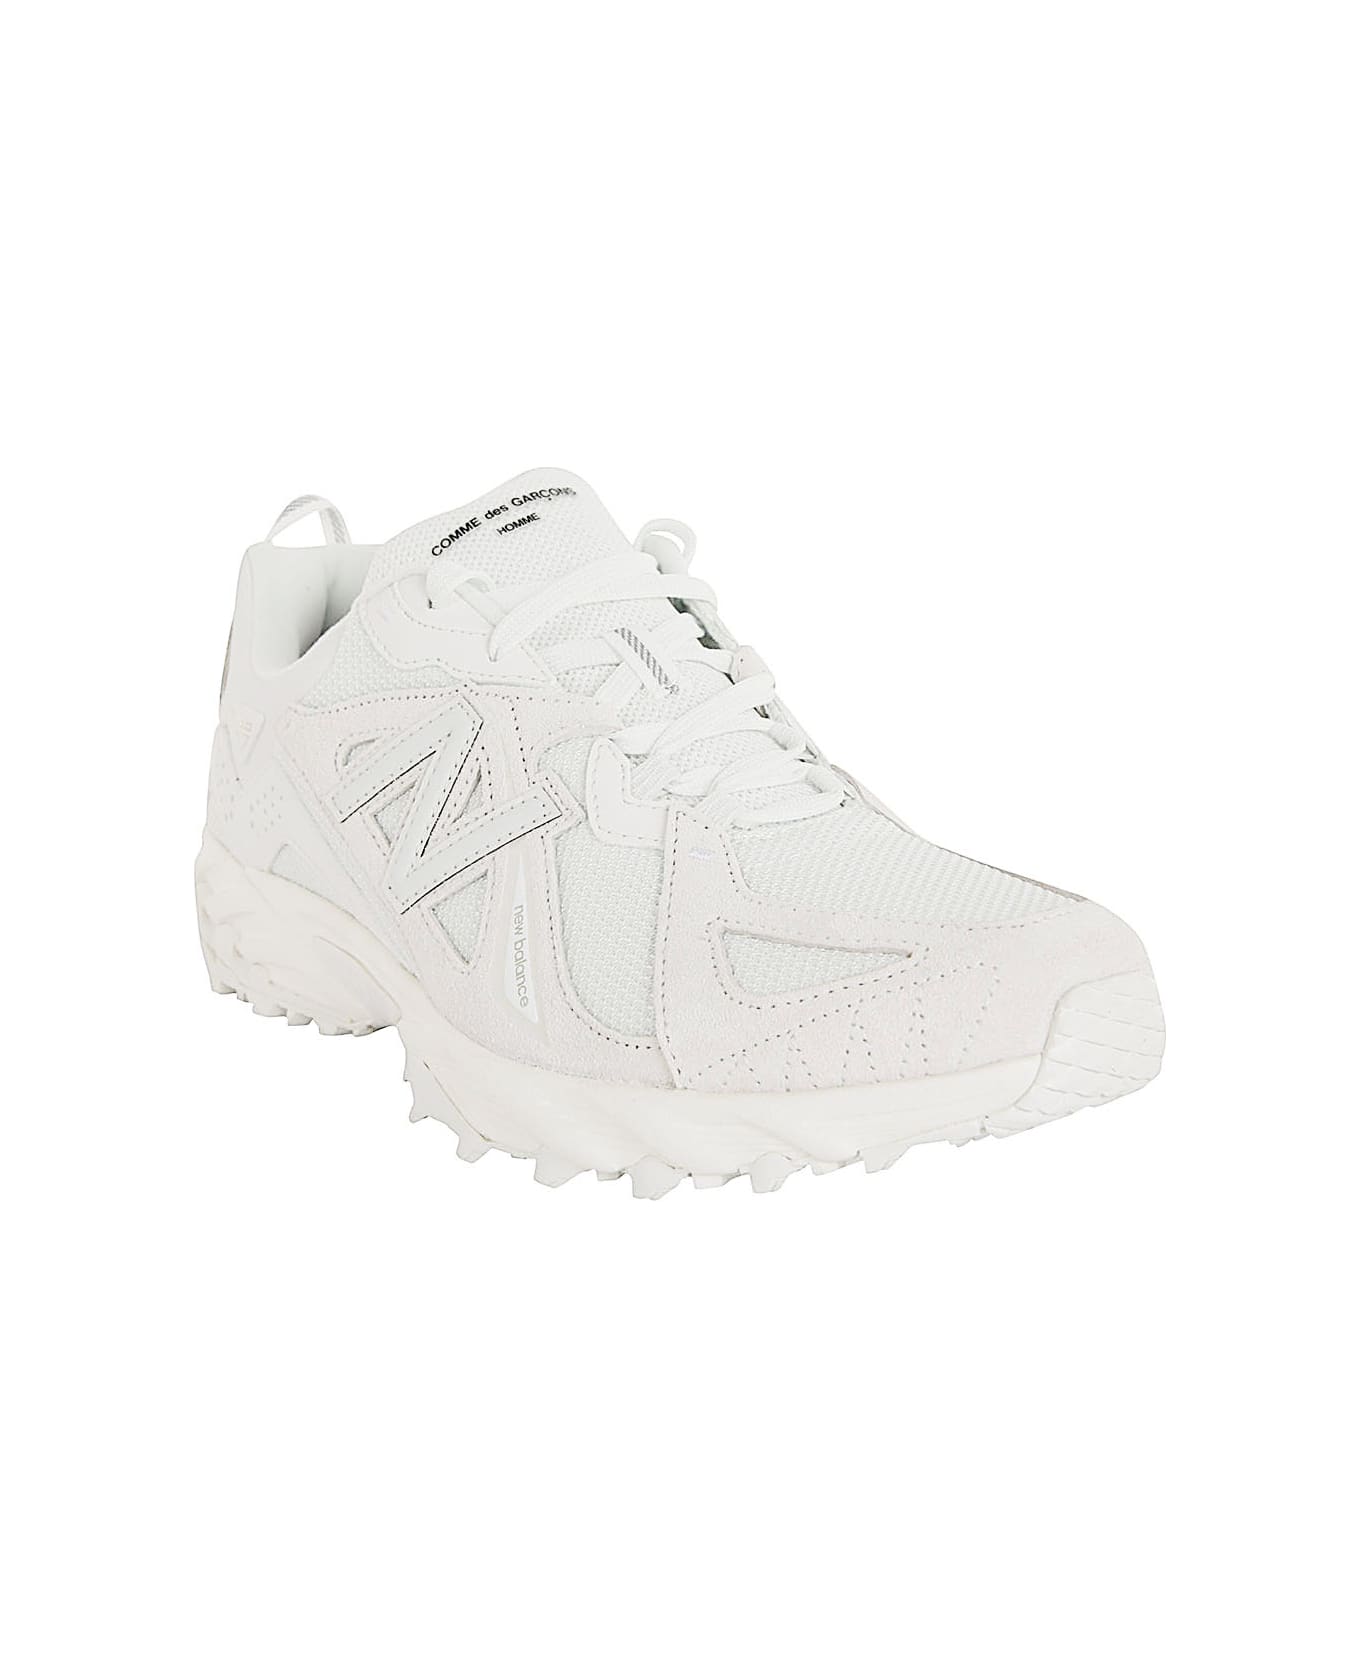 Comme des Garçons Homme New Balance Collab Sneakers - White